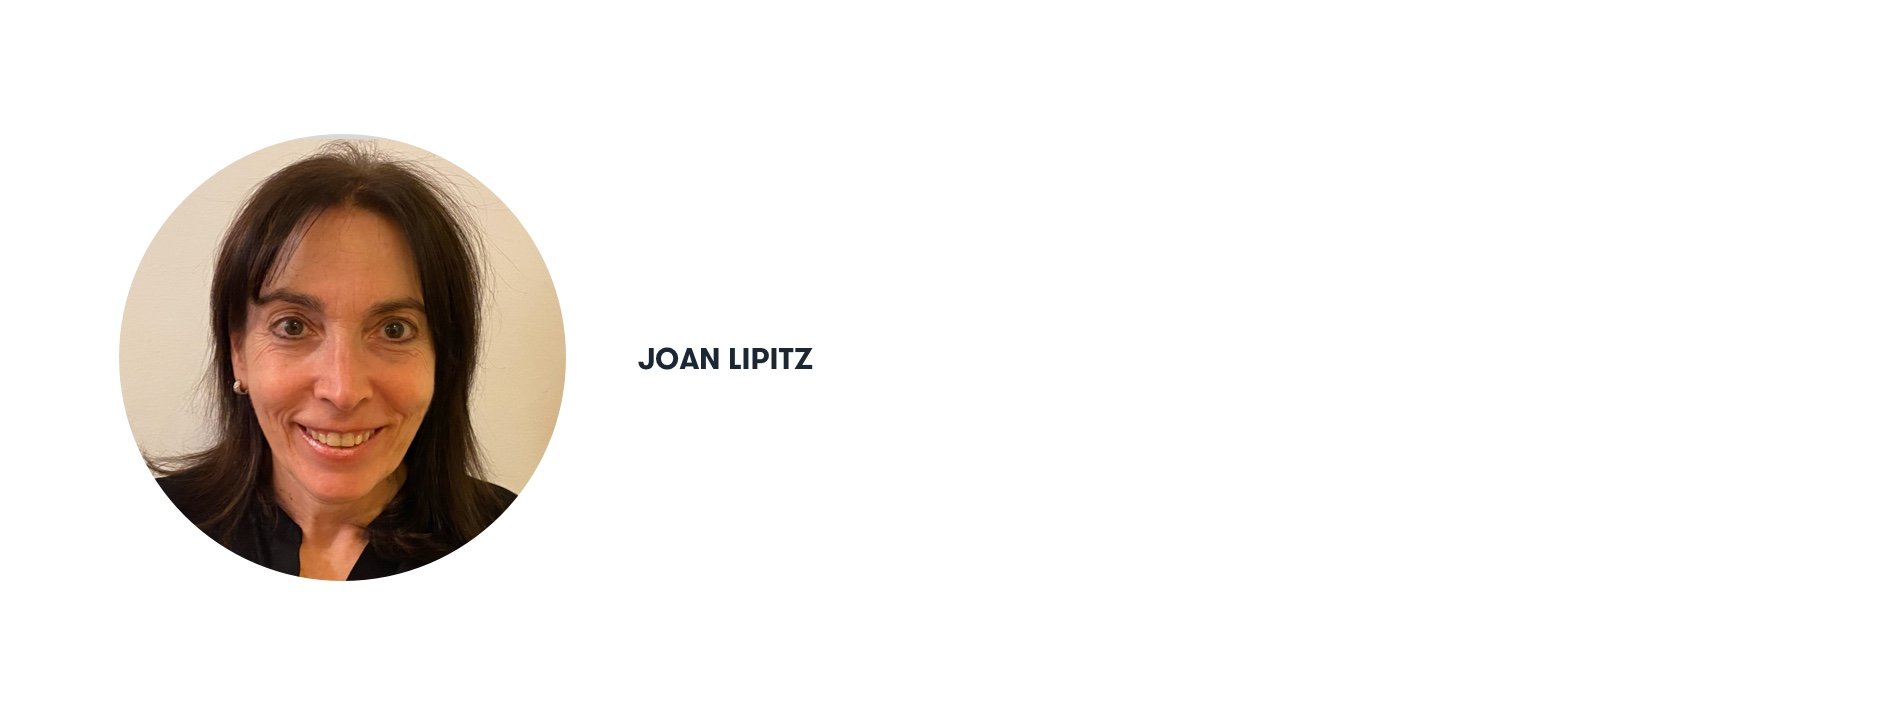 Joan Lipitz